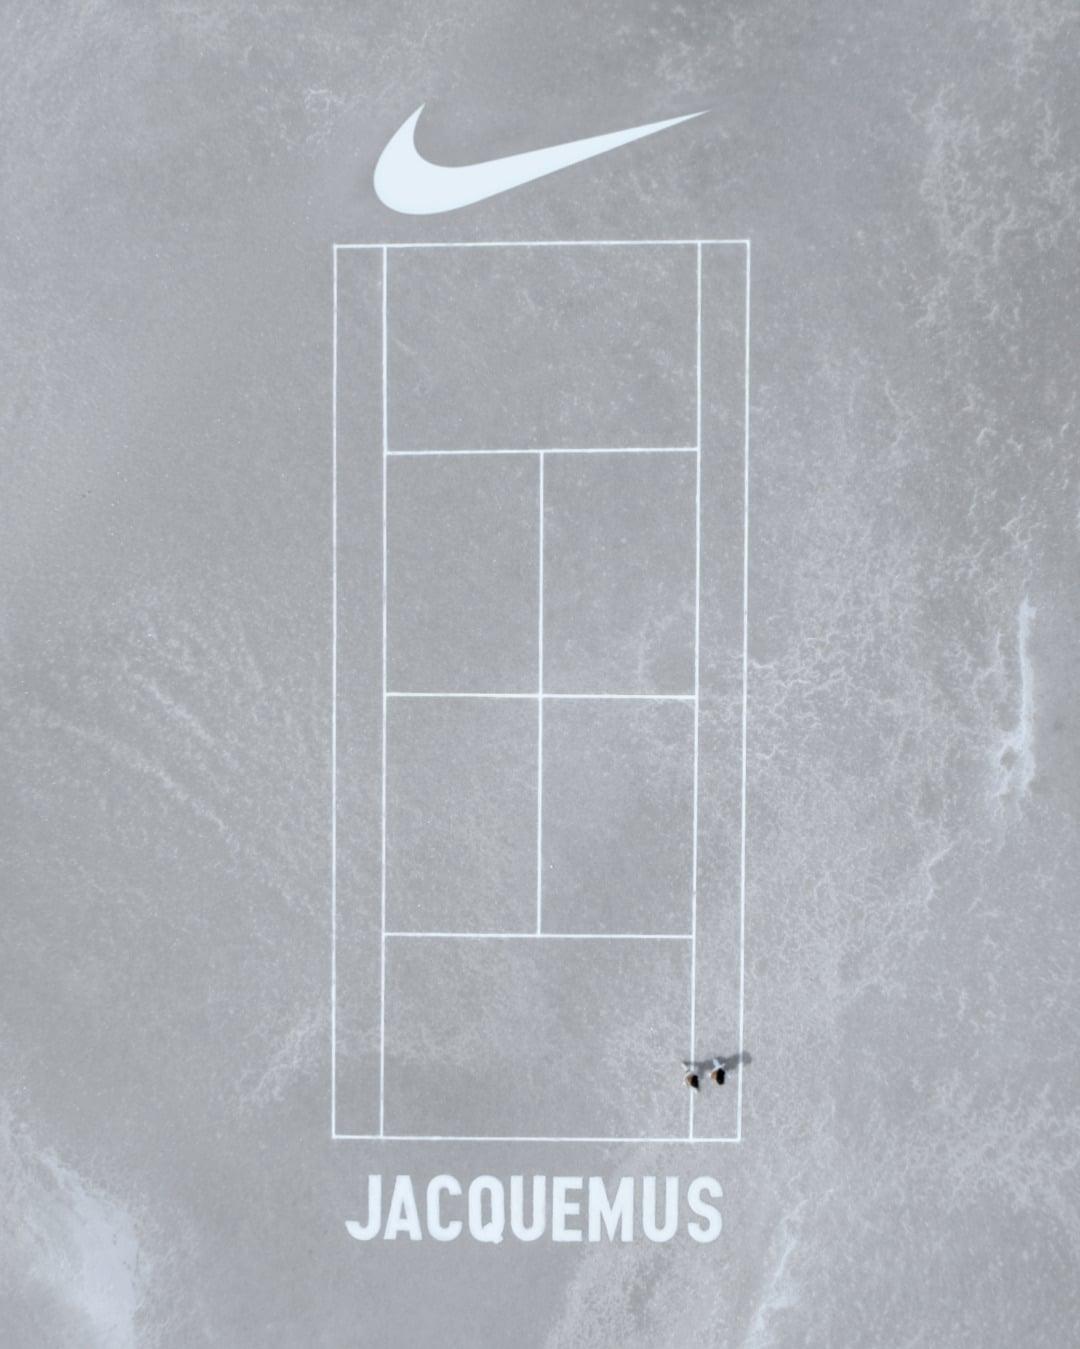 Nike Announces Collaboration With Jacquemus Popsugar Fashion